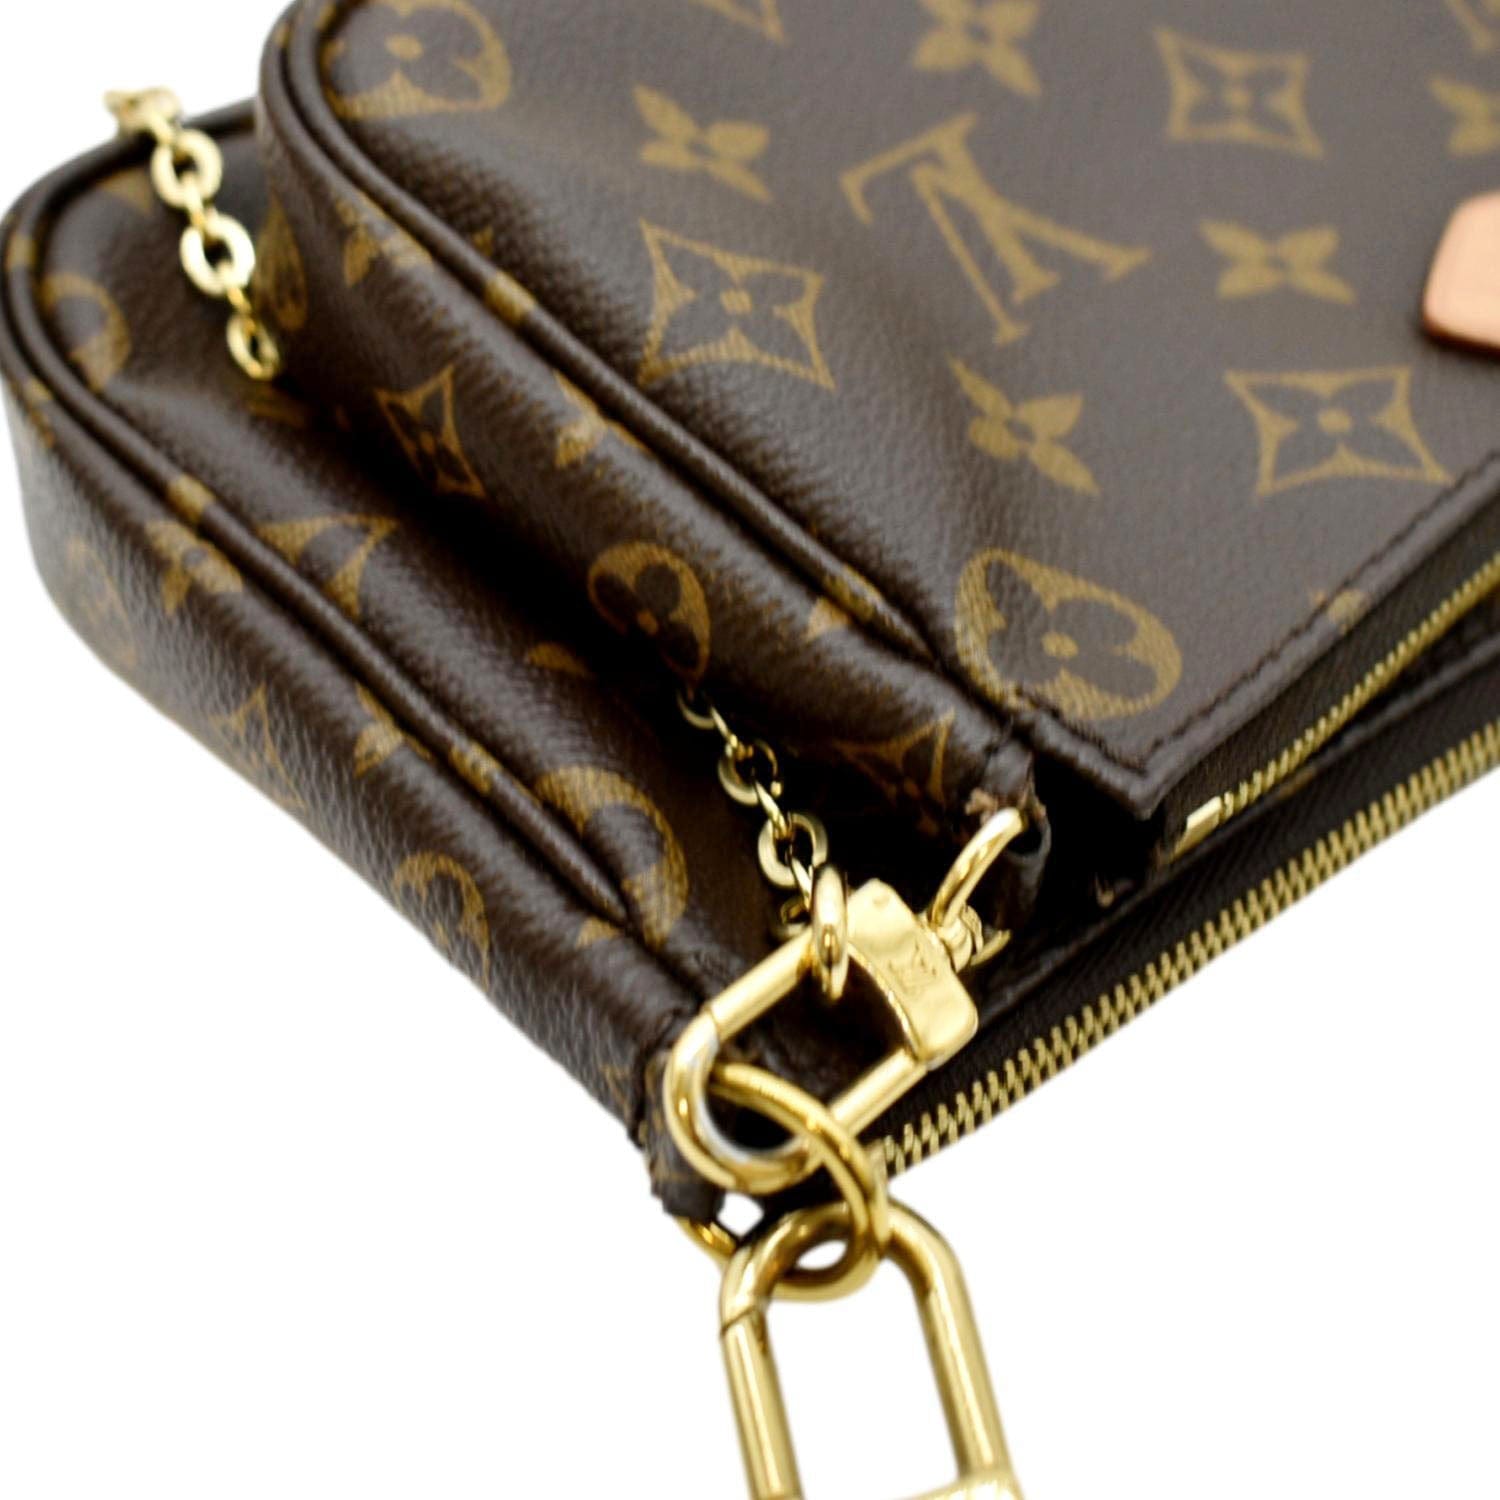 Multi Pochette Accessoires Monogram - Handbags